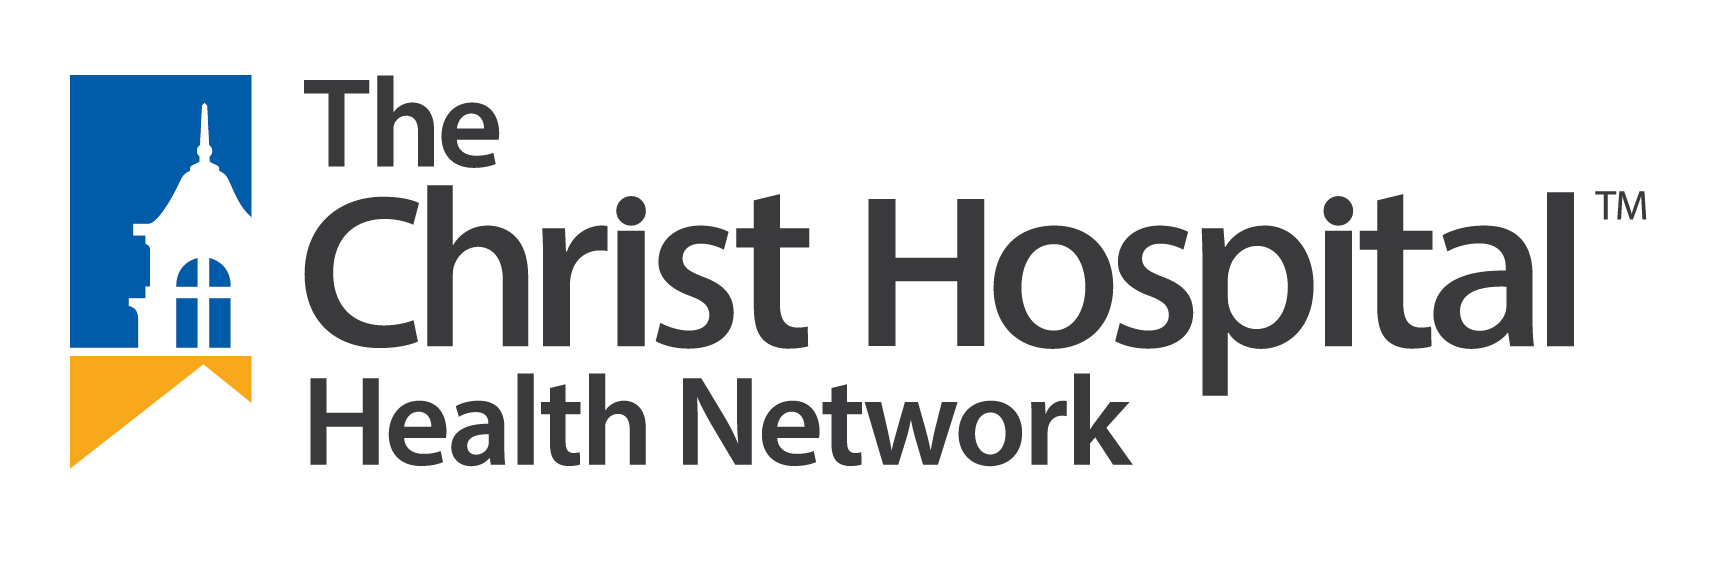 The Christ Hospital Network